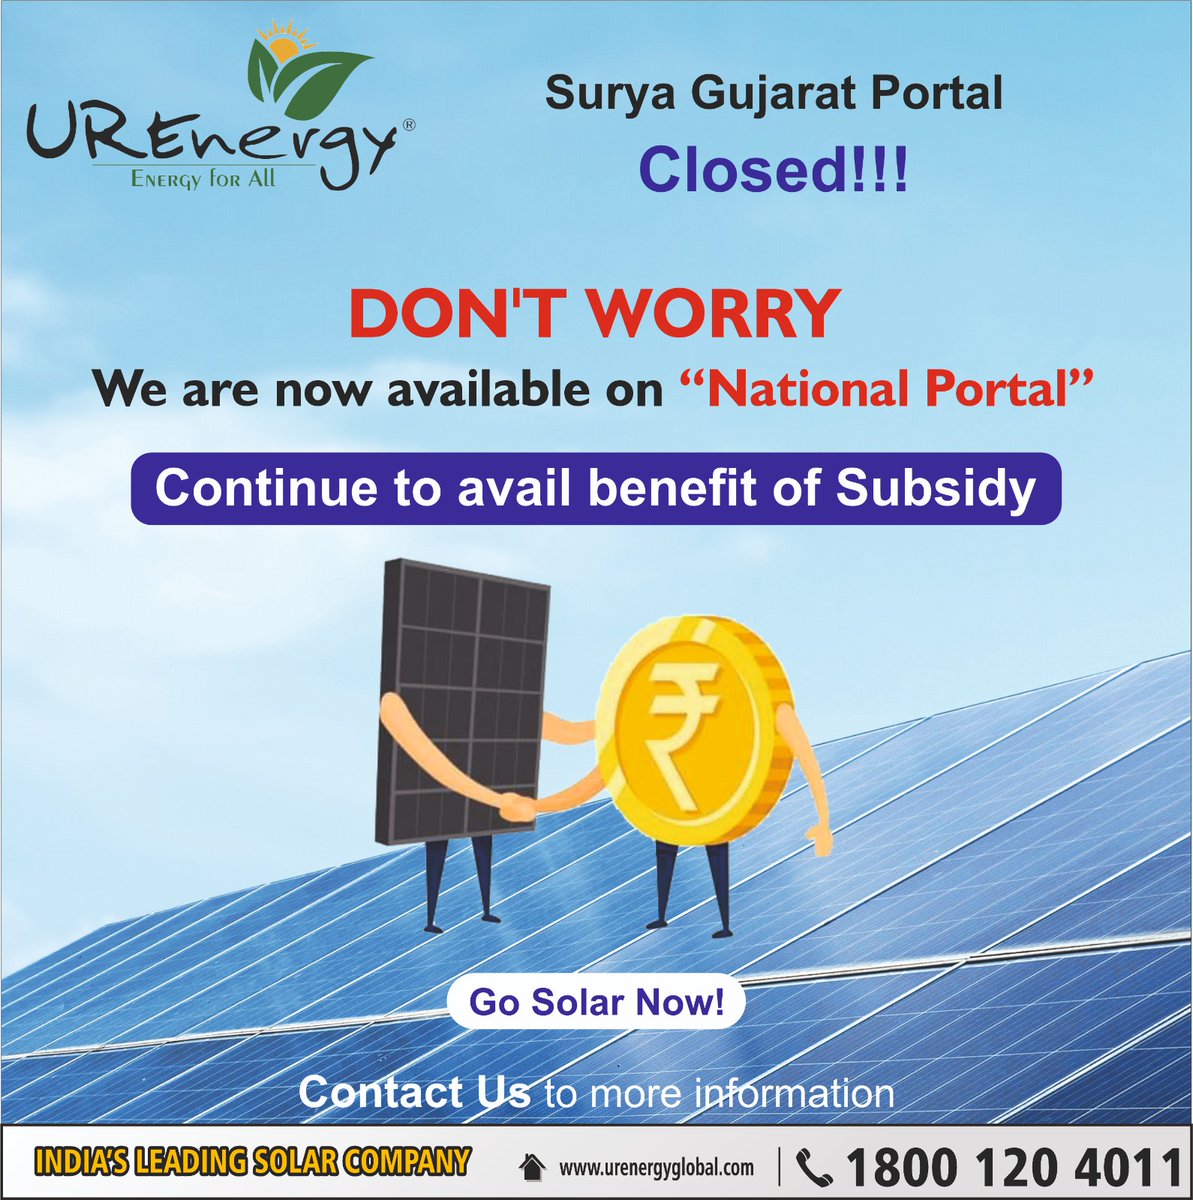 𝐒𝐮𝐫𝐲𝐚 𝐆𝐮𝐣𝐚𝐫𝐚𝐭 𝐏𝐨𝐫𝐭𝐚𝐥 𝐂𝐥𝐨𝐬𝐞𝐝 !!!
                     𝘽𝙐𝙏
𝐍𝐚𝐭𝐢𝐨𝐧𝐚𝐥 𝐏𝐨𝐫𝐭𝐚𝐥 𝐢𝐬 𝐨𝐩𝐞𝐧 𝐟𝐨𝐫 𝐒𝐨𝐥𝐚𝐫 𝐀𝐩𝐩𝐥𝐢𝐜𝐚𝐭𝐢𝐨𝐧

#solar #subsidy #loan #govtsubsidy #suryagujarat #bestsolarcompany #solarpanel